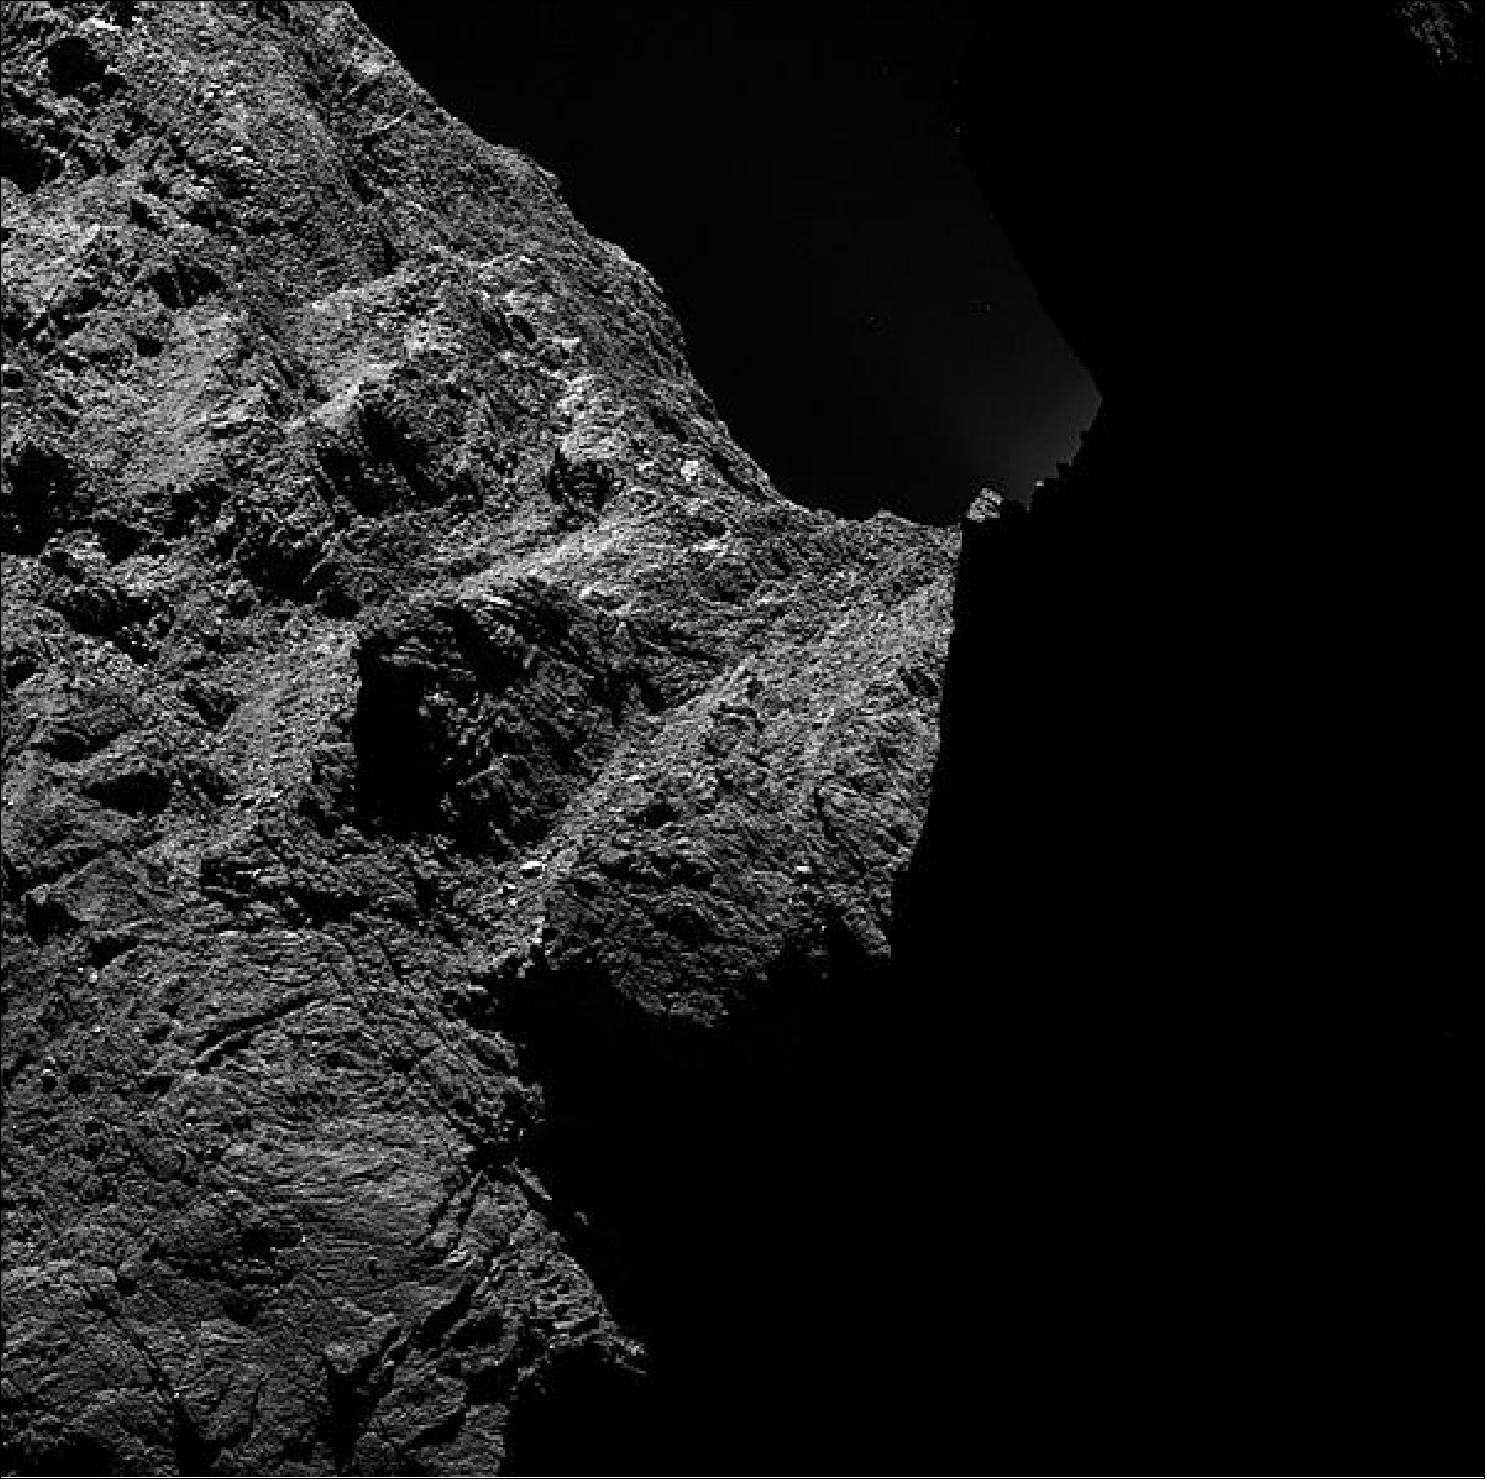 Figure 162: Image of the dark side of Comet 67P/Churyumov-Gerasimenko (image credit: ESA, Rosetta,MPS for OSIRIS Team MPS, UPD, LAM, IAA, SSO, INTA, UPM, DASP, IDA)